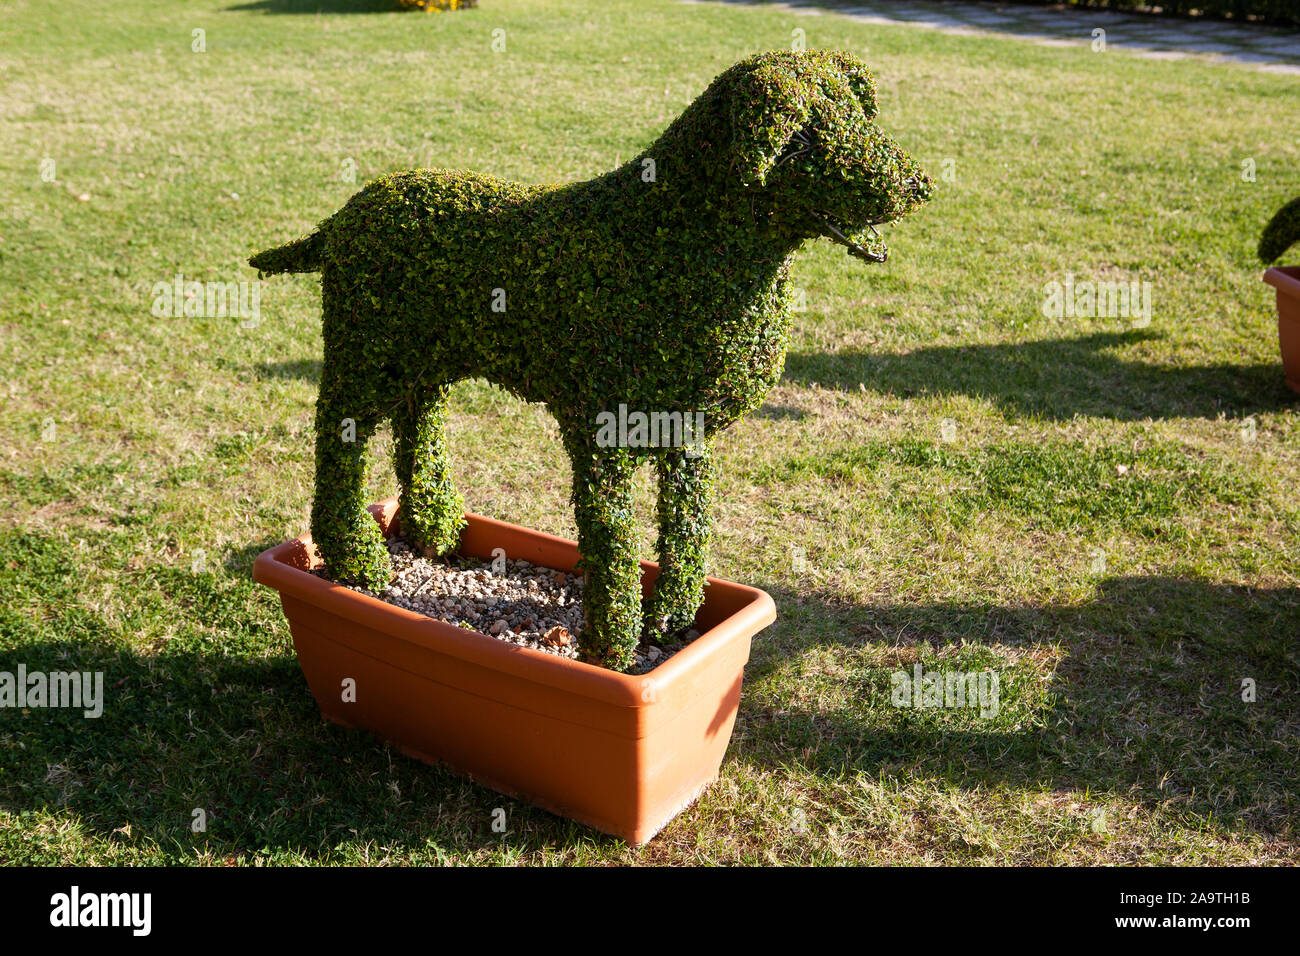 Topiary Garten Schnitt in Hund Form Stockfotografie - Alamy